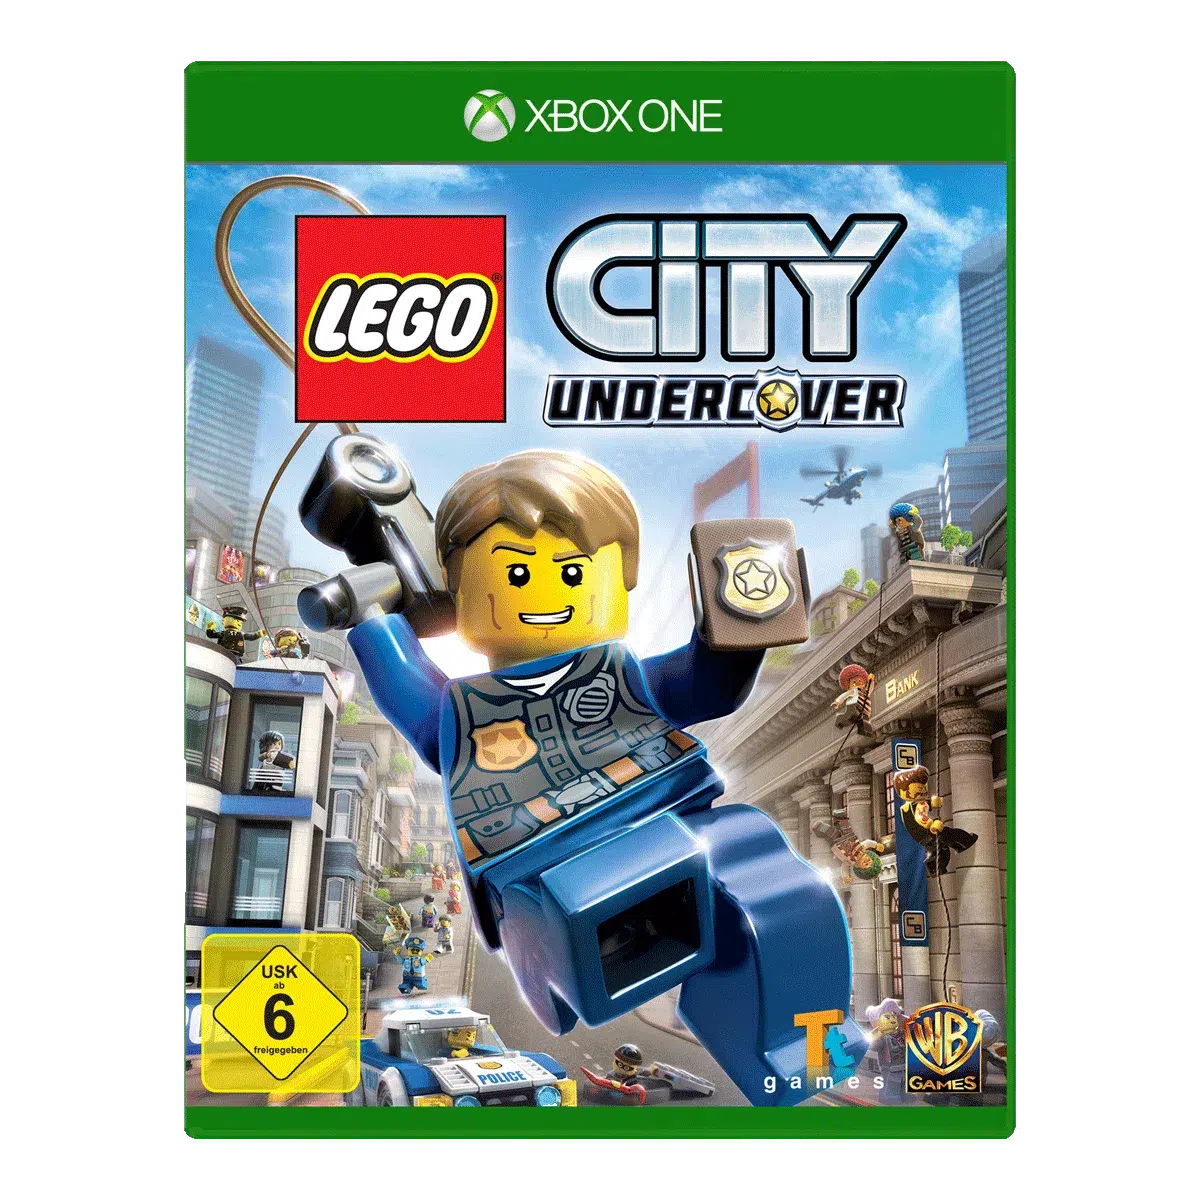 LEGO CITY Undercover (XONE)